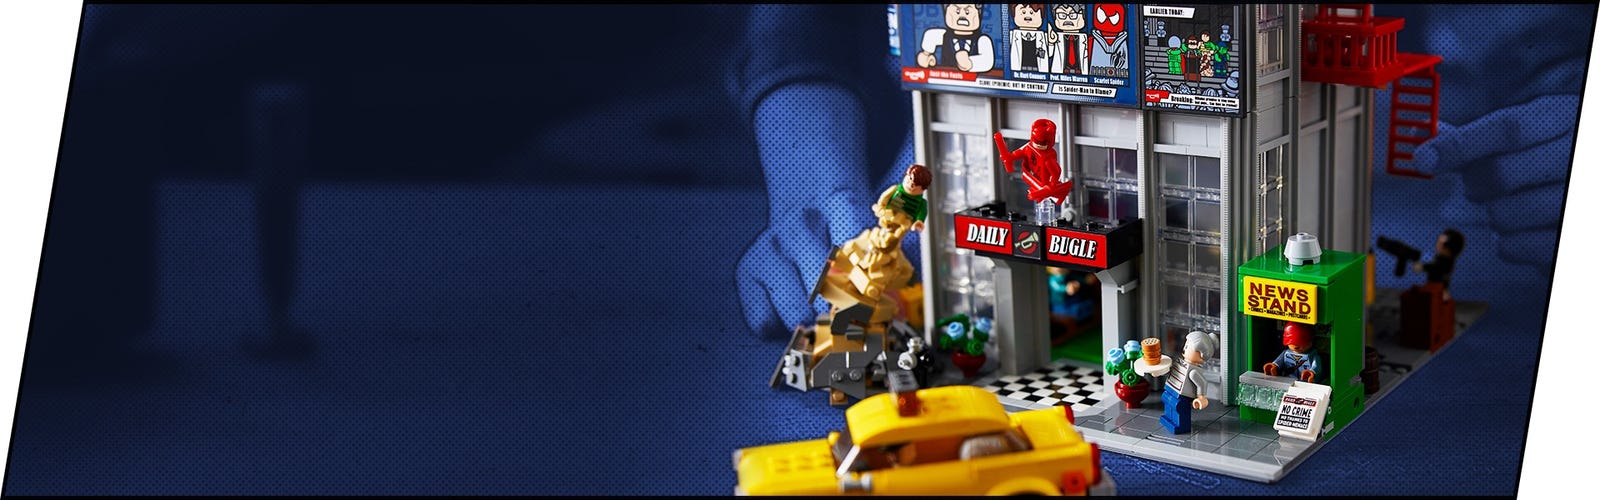 LEGO Marvel Spider-Man 76178 Daily Bugle revealed with 25